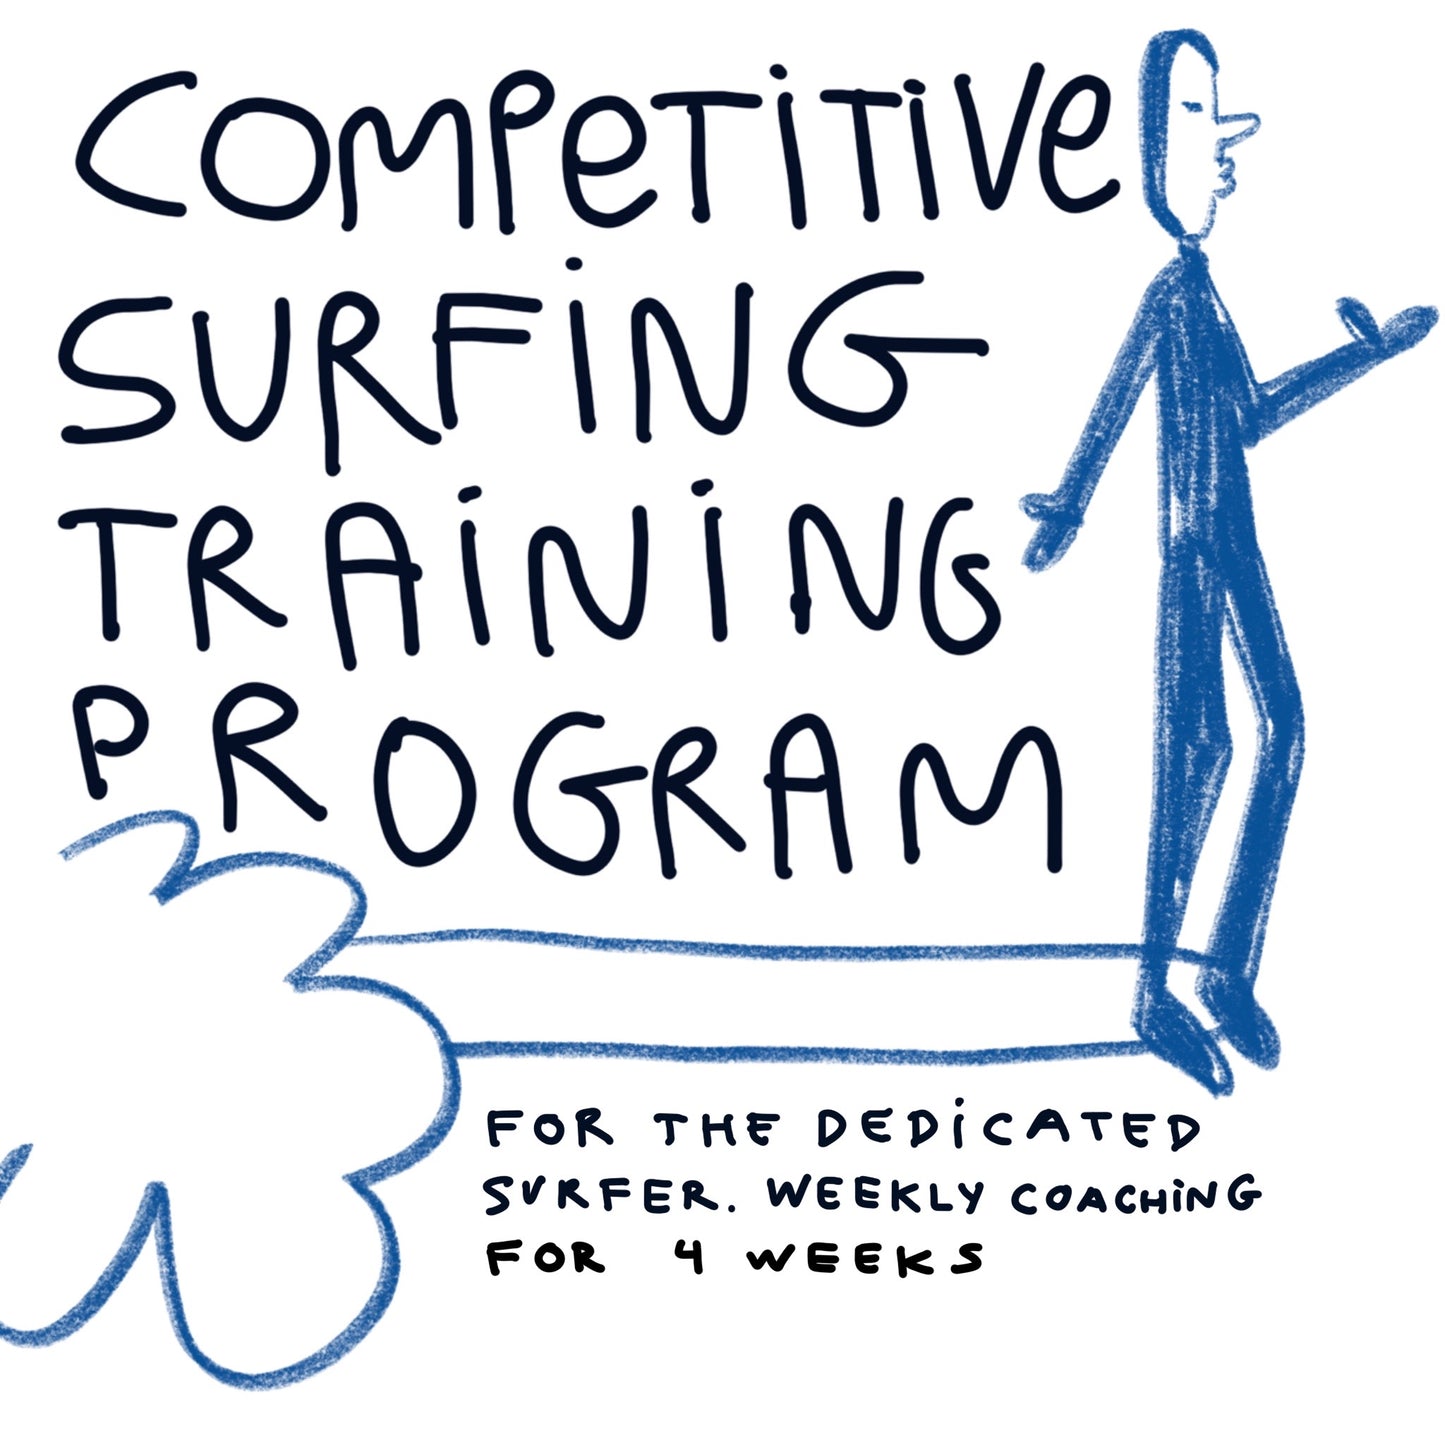 Competitive surfing training program